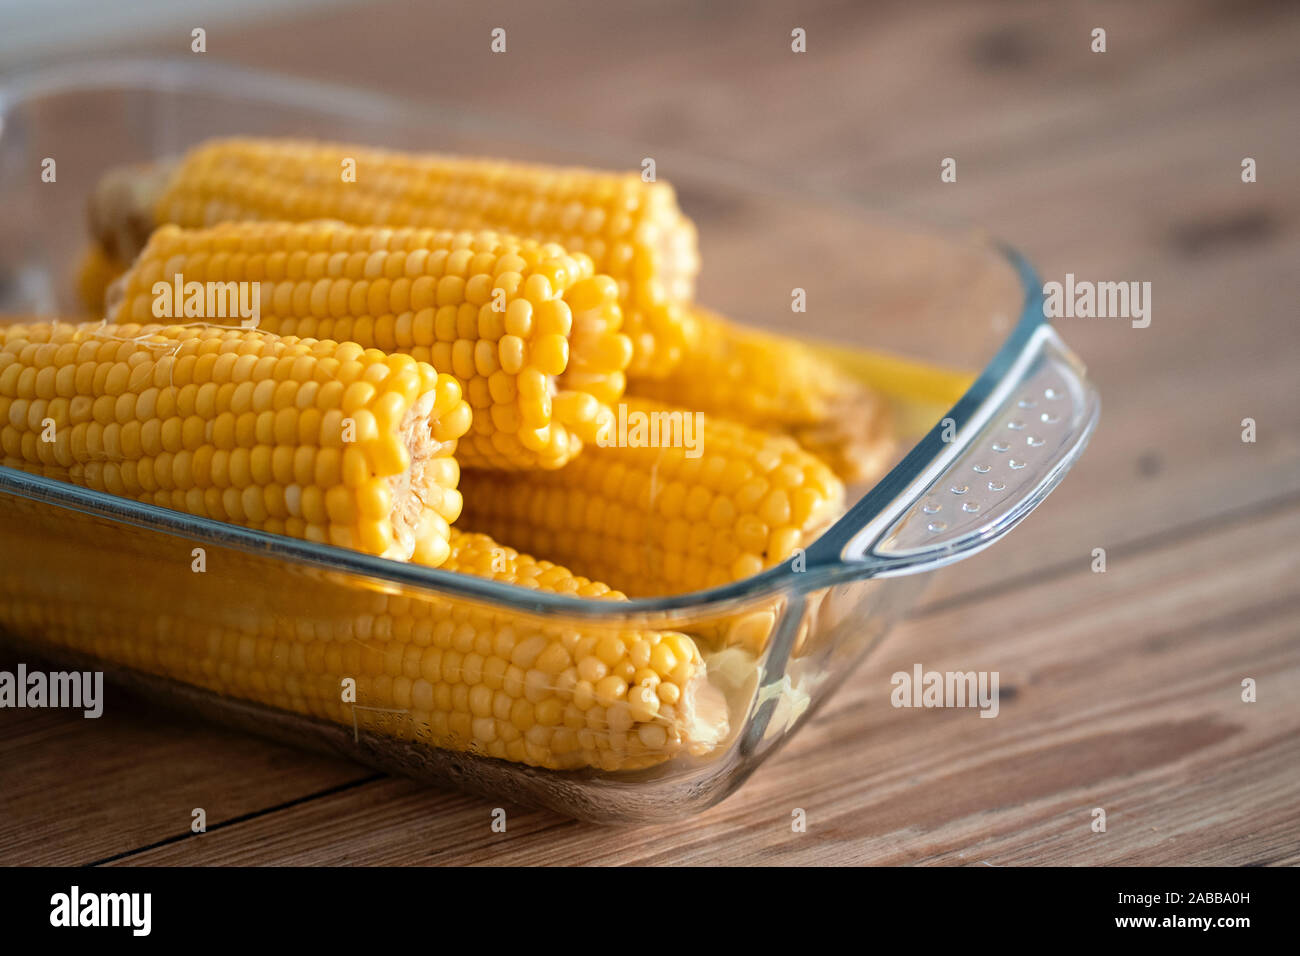 Cucinata sulla pannocchia di mais. Dorata bolliti sulla pannocchia di mais Foto Stock